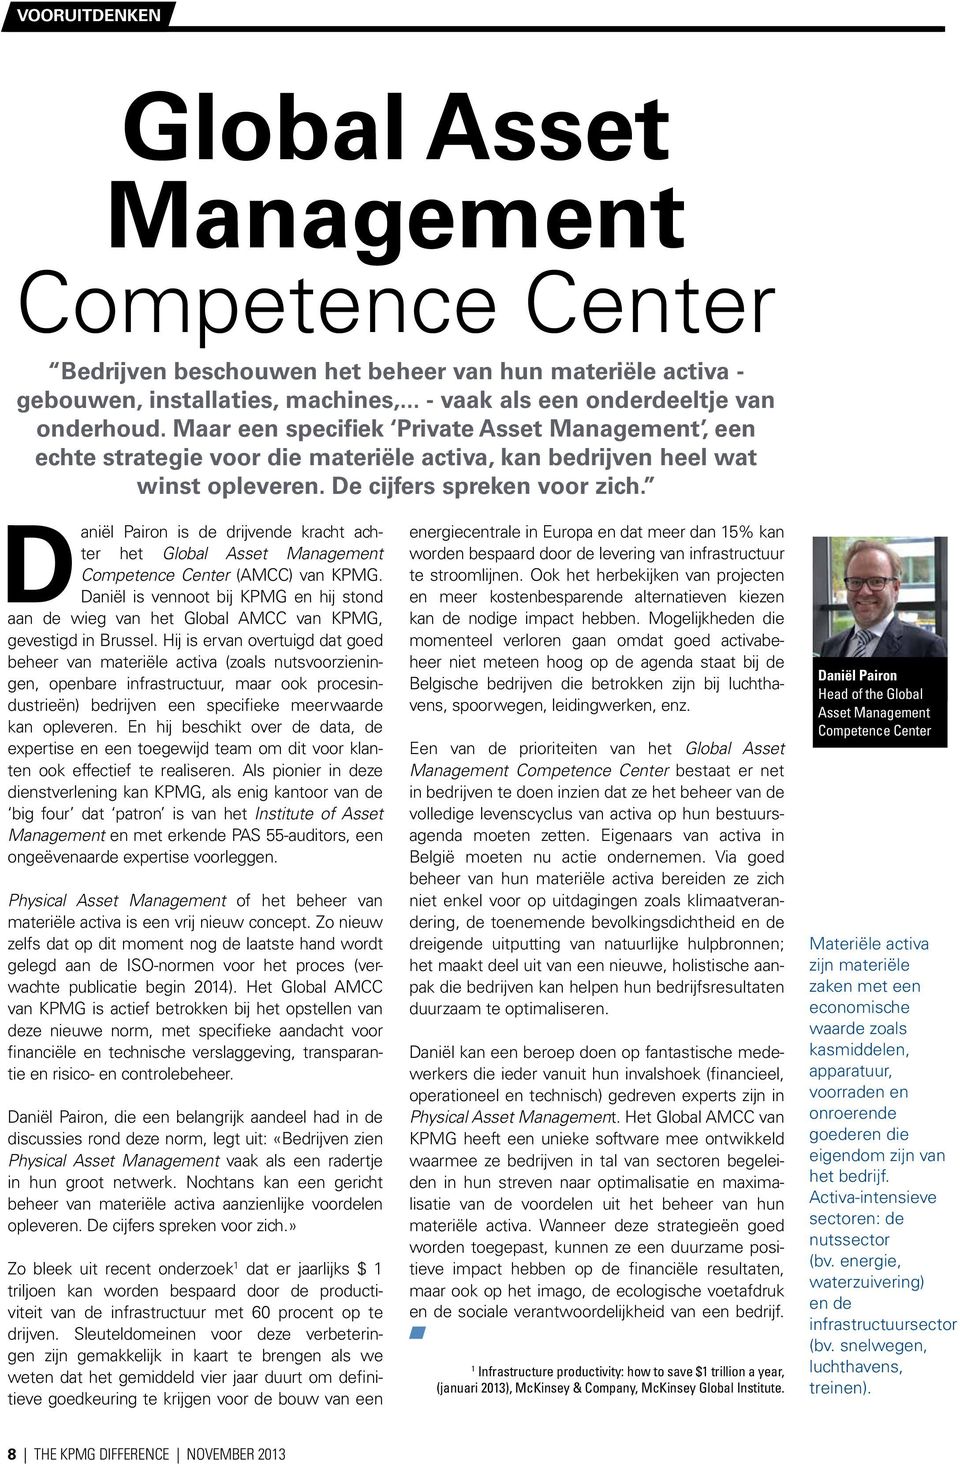 Daniël Pairon is de drijvende kracht achter het Global Asset Management Competence Center (AMCC) van KPMG.